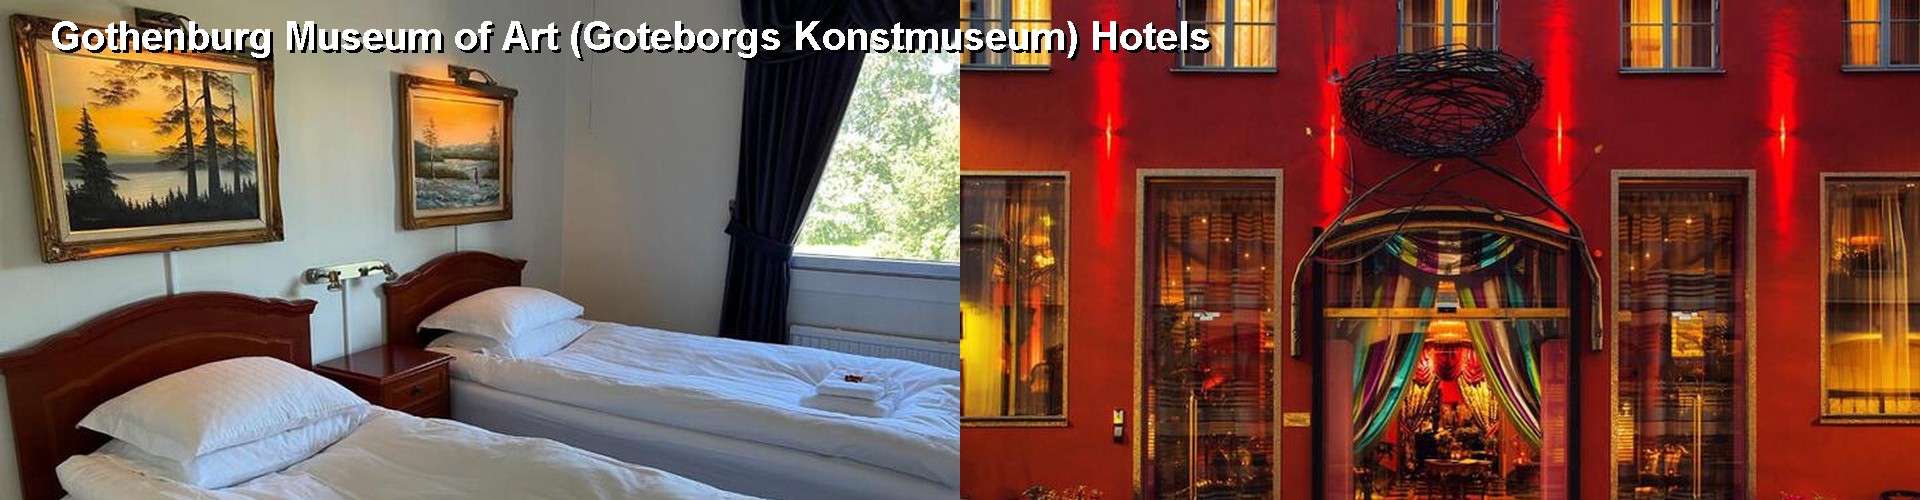 4 Best Hotels near Gothenburg Museum of Art (Goteborgs Konstmuseum)